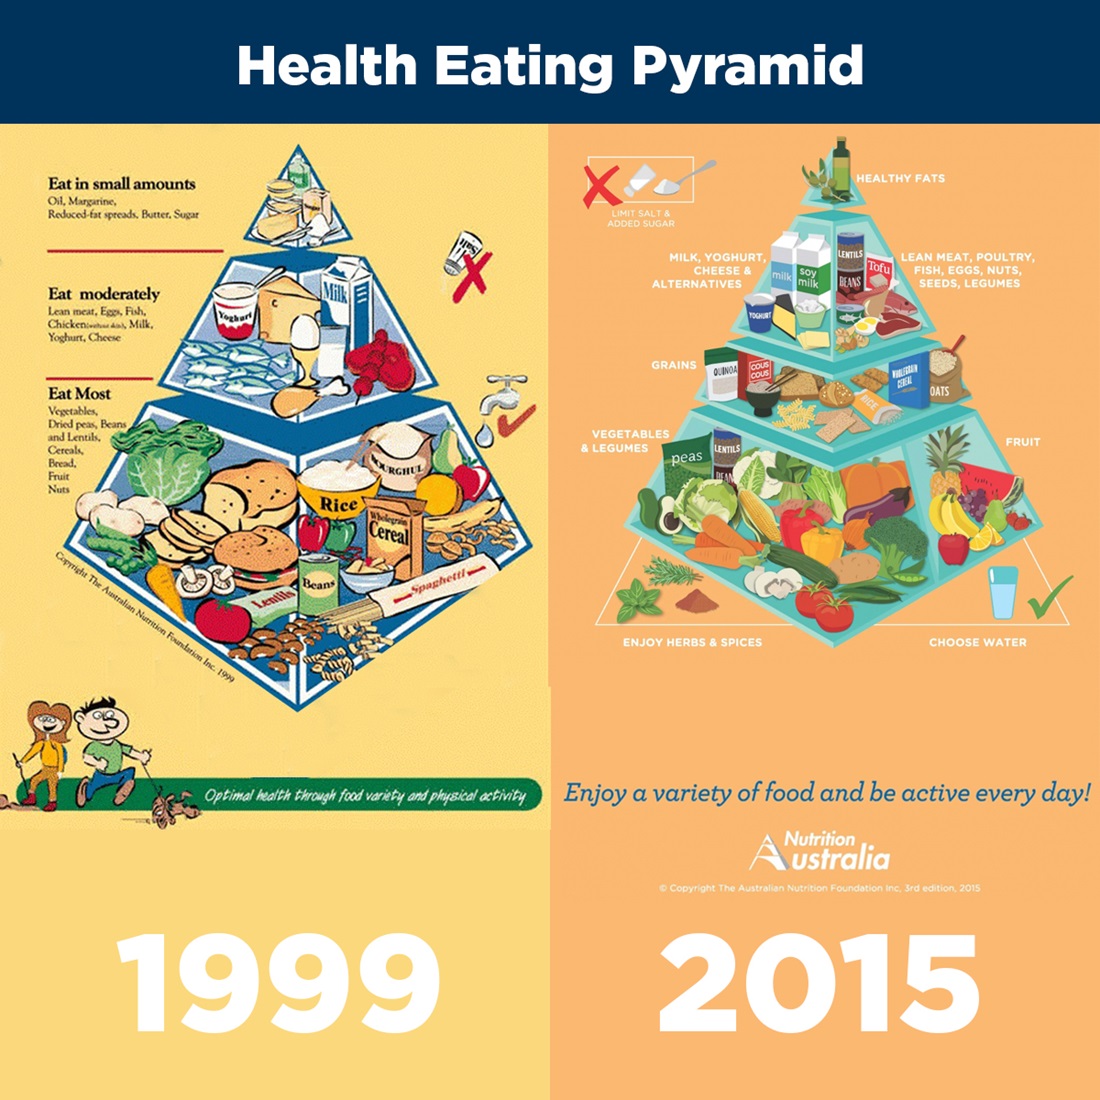 health eating pyramid 2015 to 1999